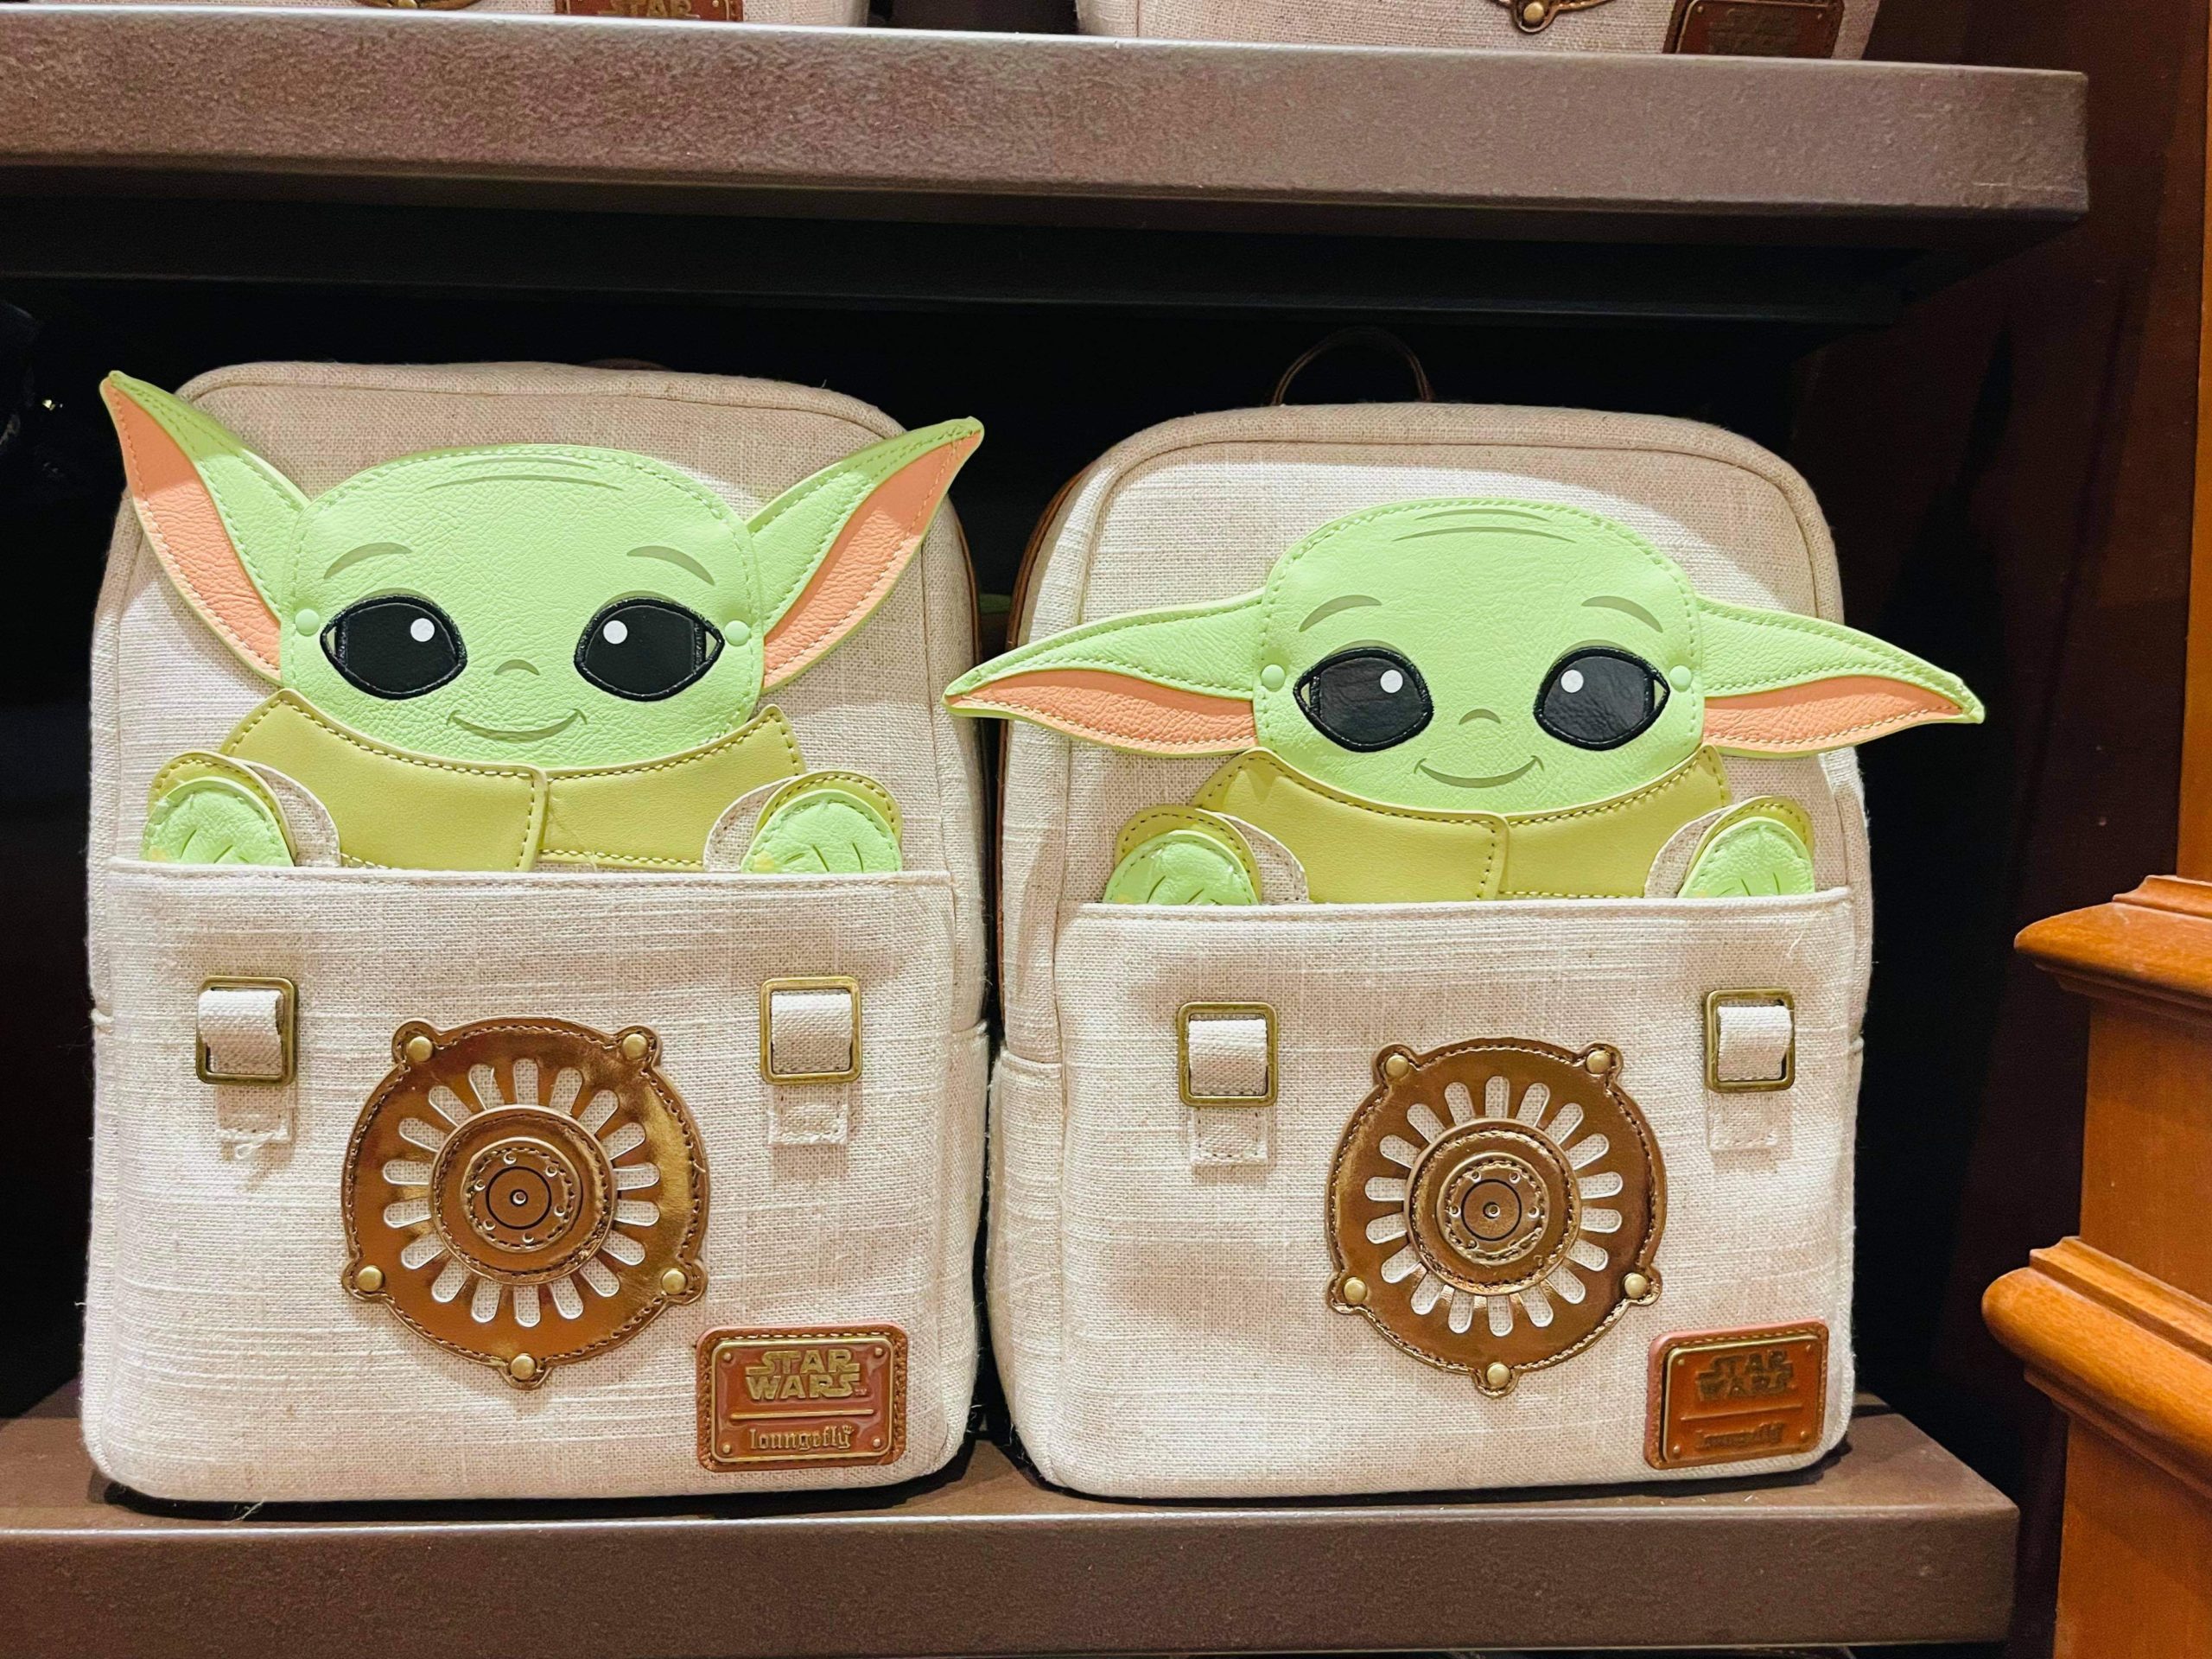 Disney Nana's shopping on Instagram: “Star Wars Grogu Loungefly